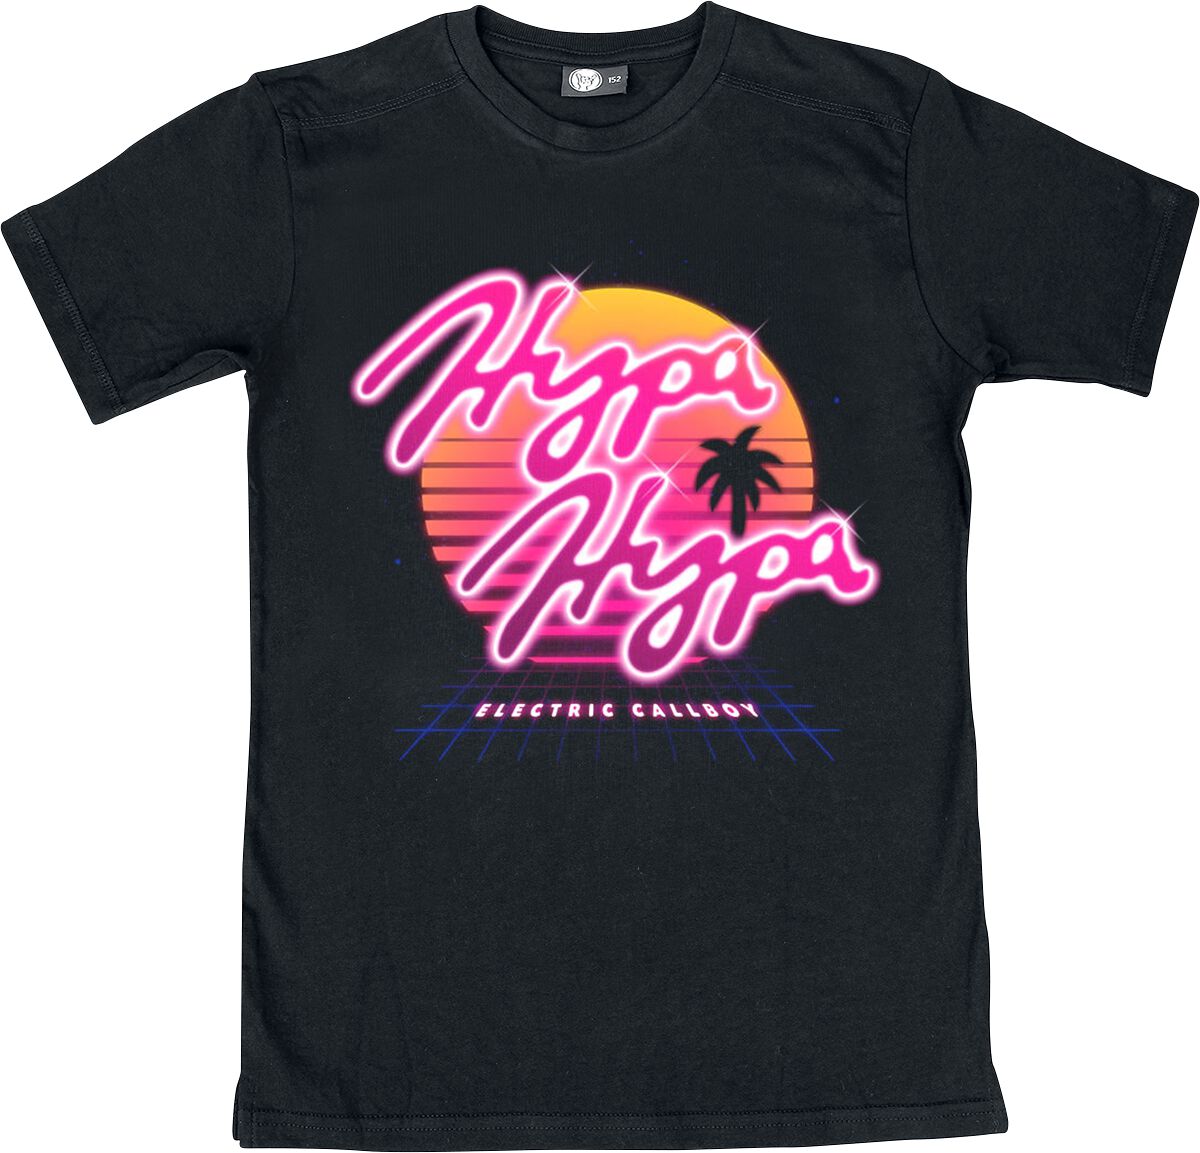 Electric Callboy Metal Kids - Hypa Hypa T-Shirt schwarz in 104